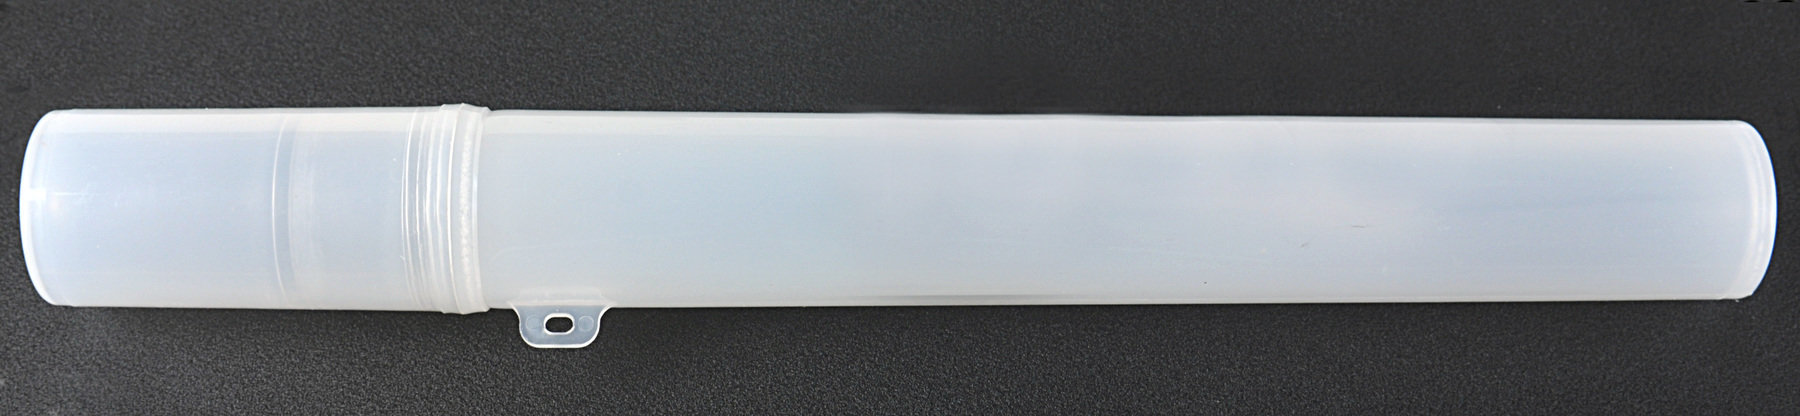 Zaščitna embalaža za kljunasto flavto Yamakawa RB-S3(WH) Zaščitna embalaža za kljunasto flavto